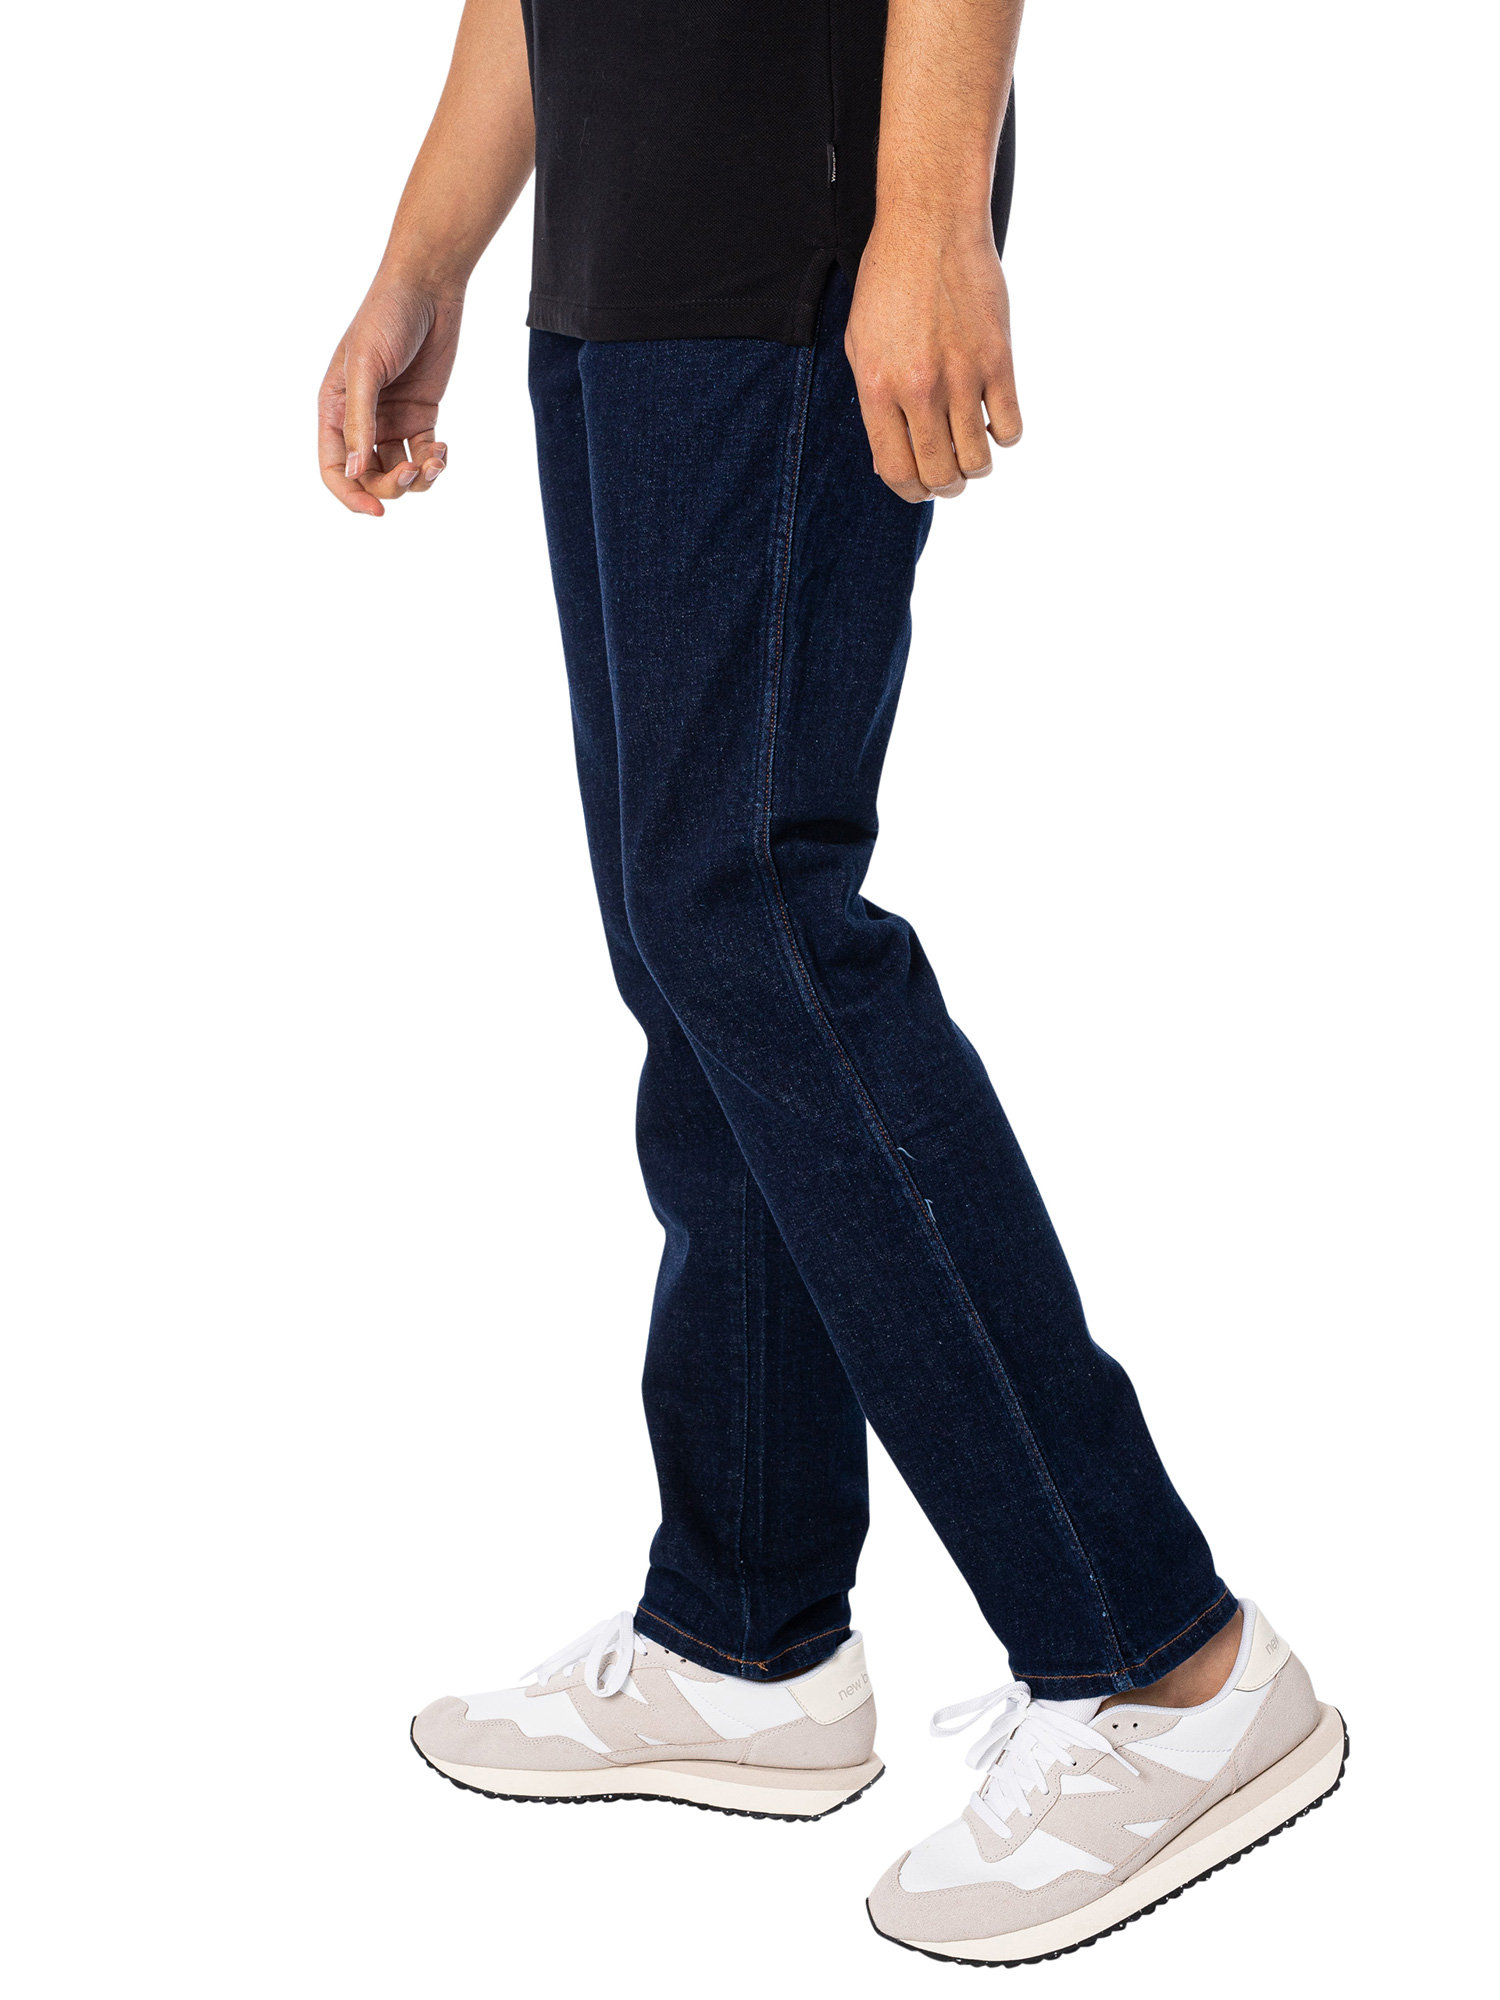 Wrangler Texas Slim 822 Jeans - Day Drifter | Standout